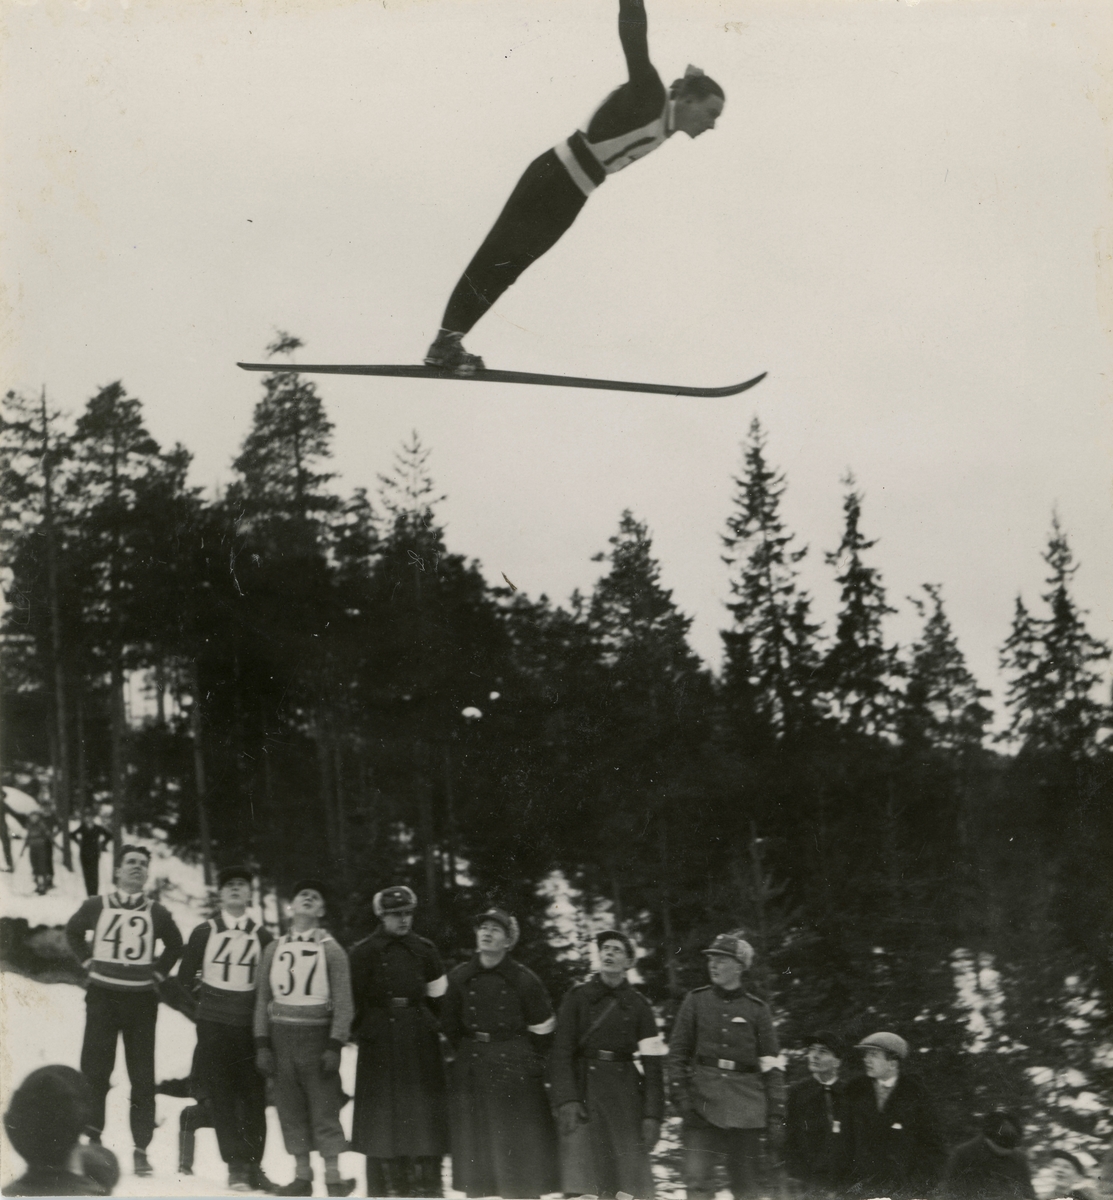 Athlete Sigmund Ruud in action